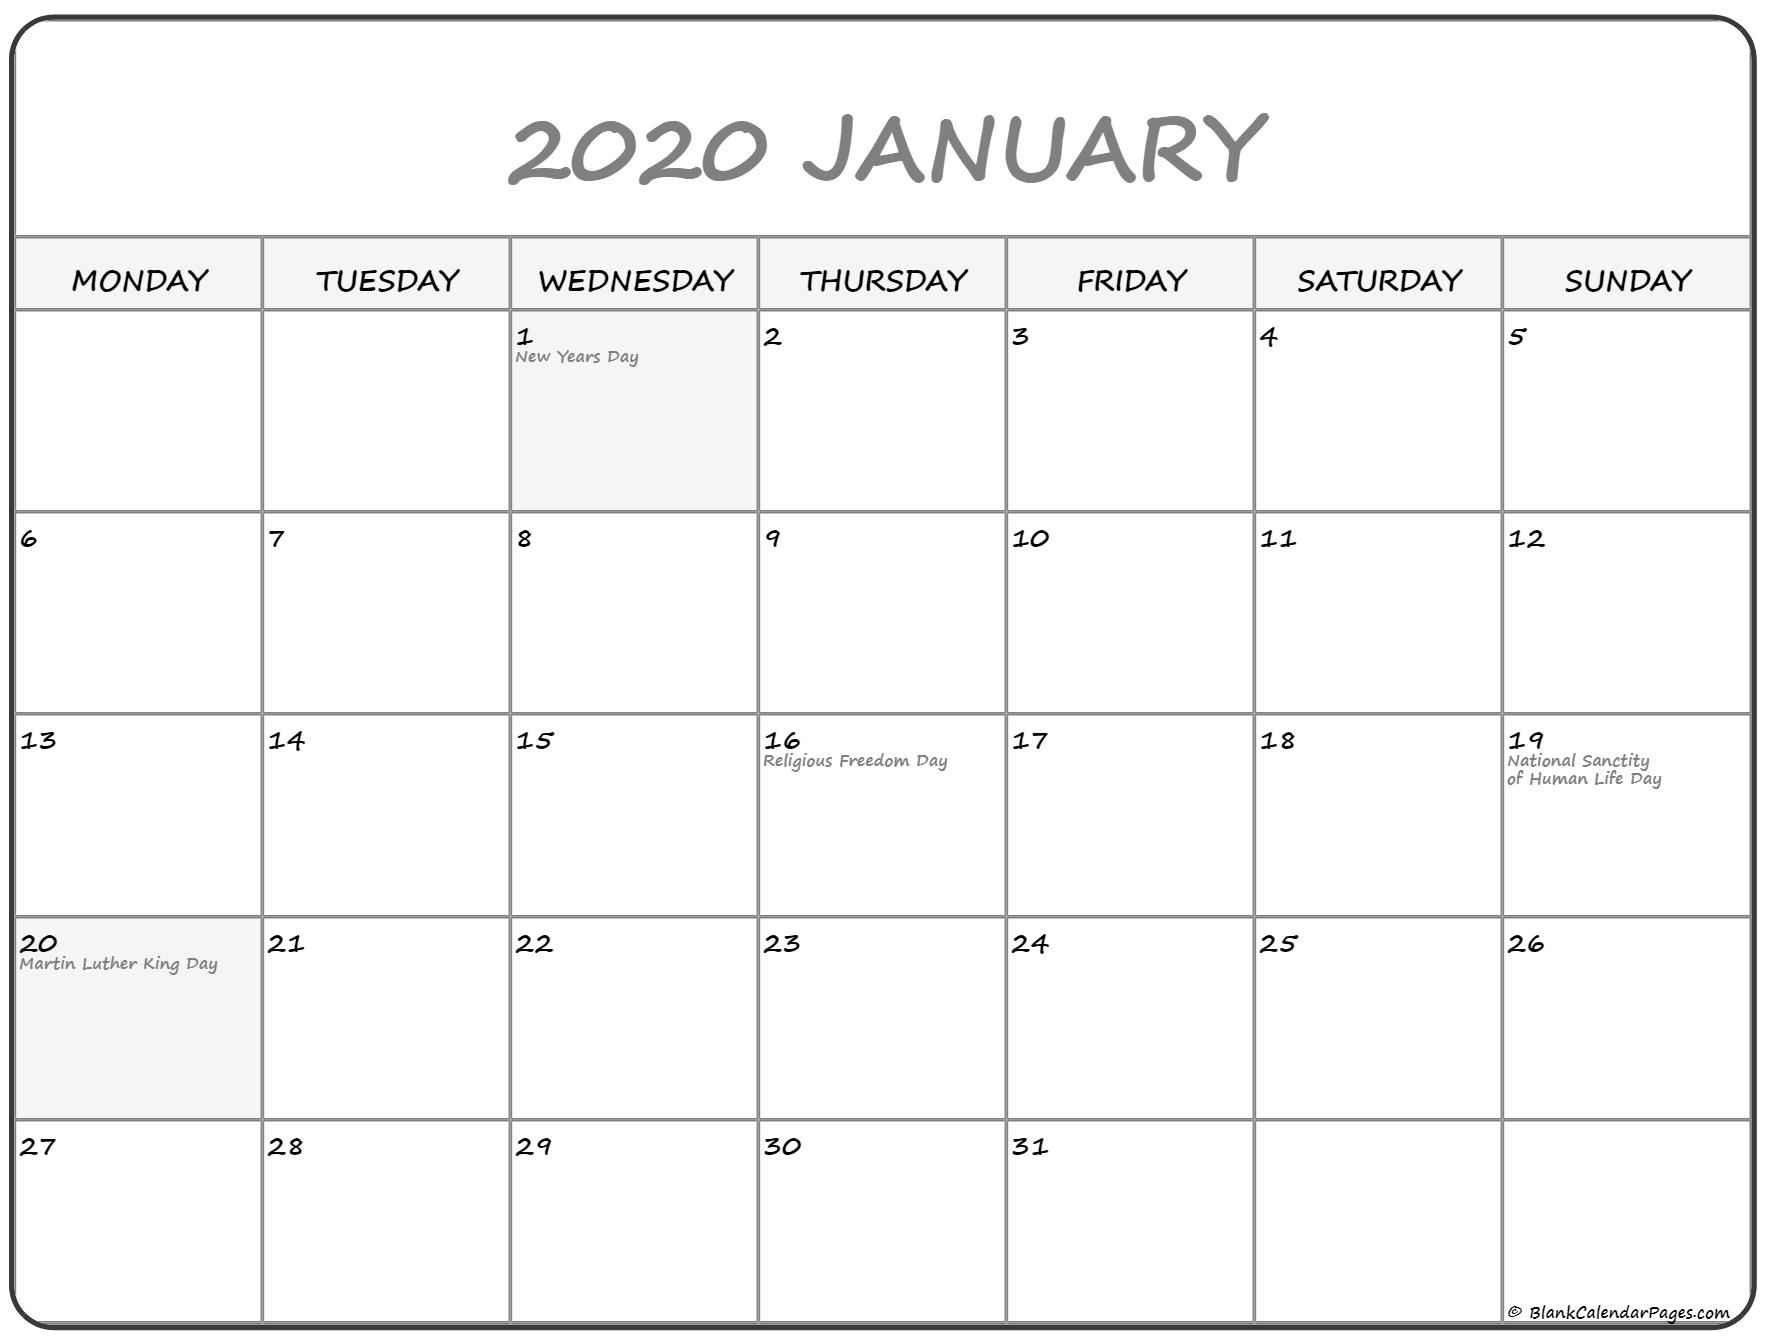 January 2020 Monday Calendar | Monday To Sunday Dashing 2020 Calendar Blank Starting Monday